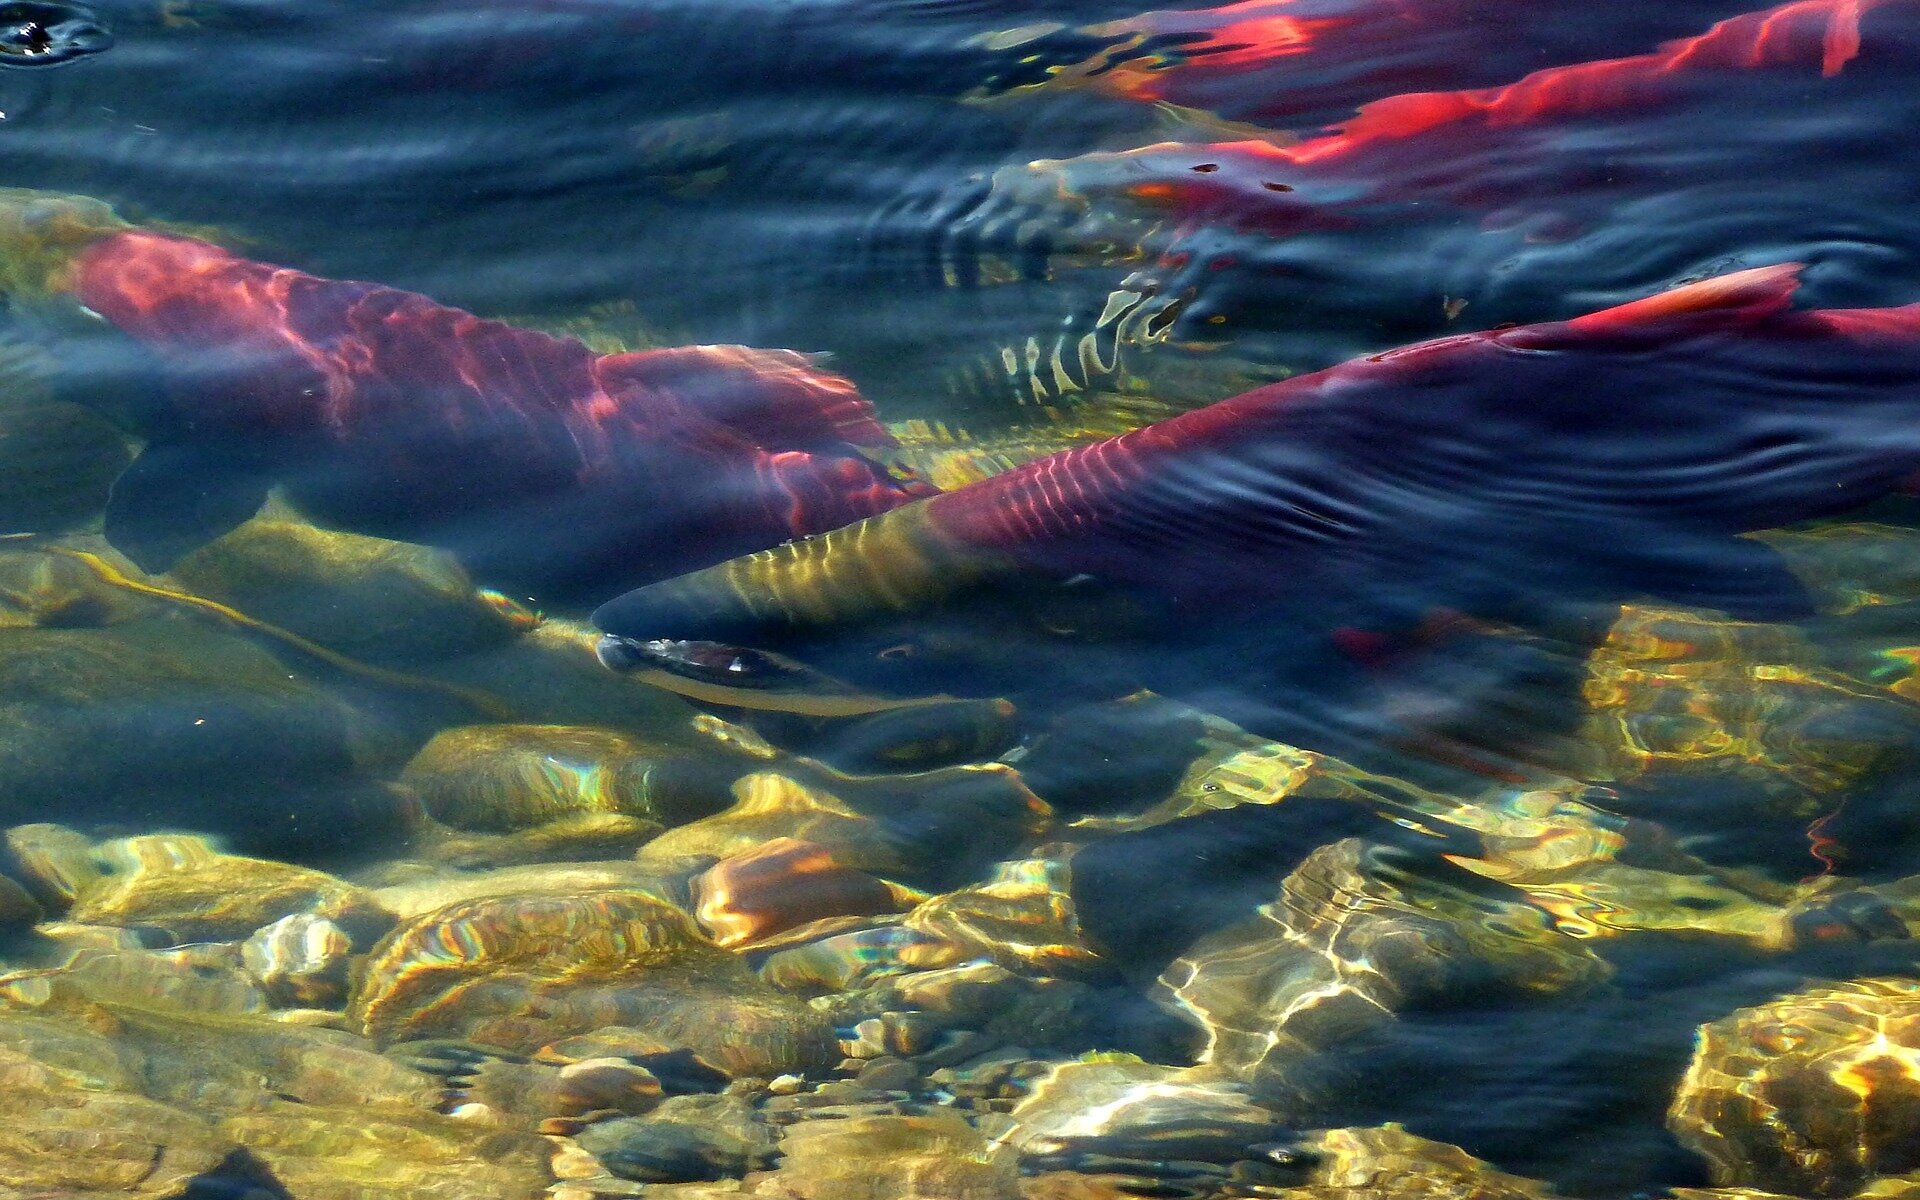 Washington dam removal means 37 more miles of salmon habitat restored